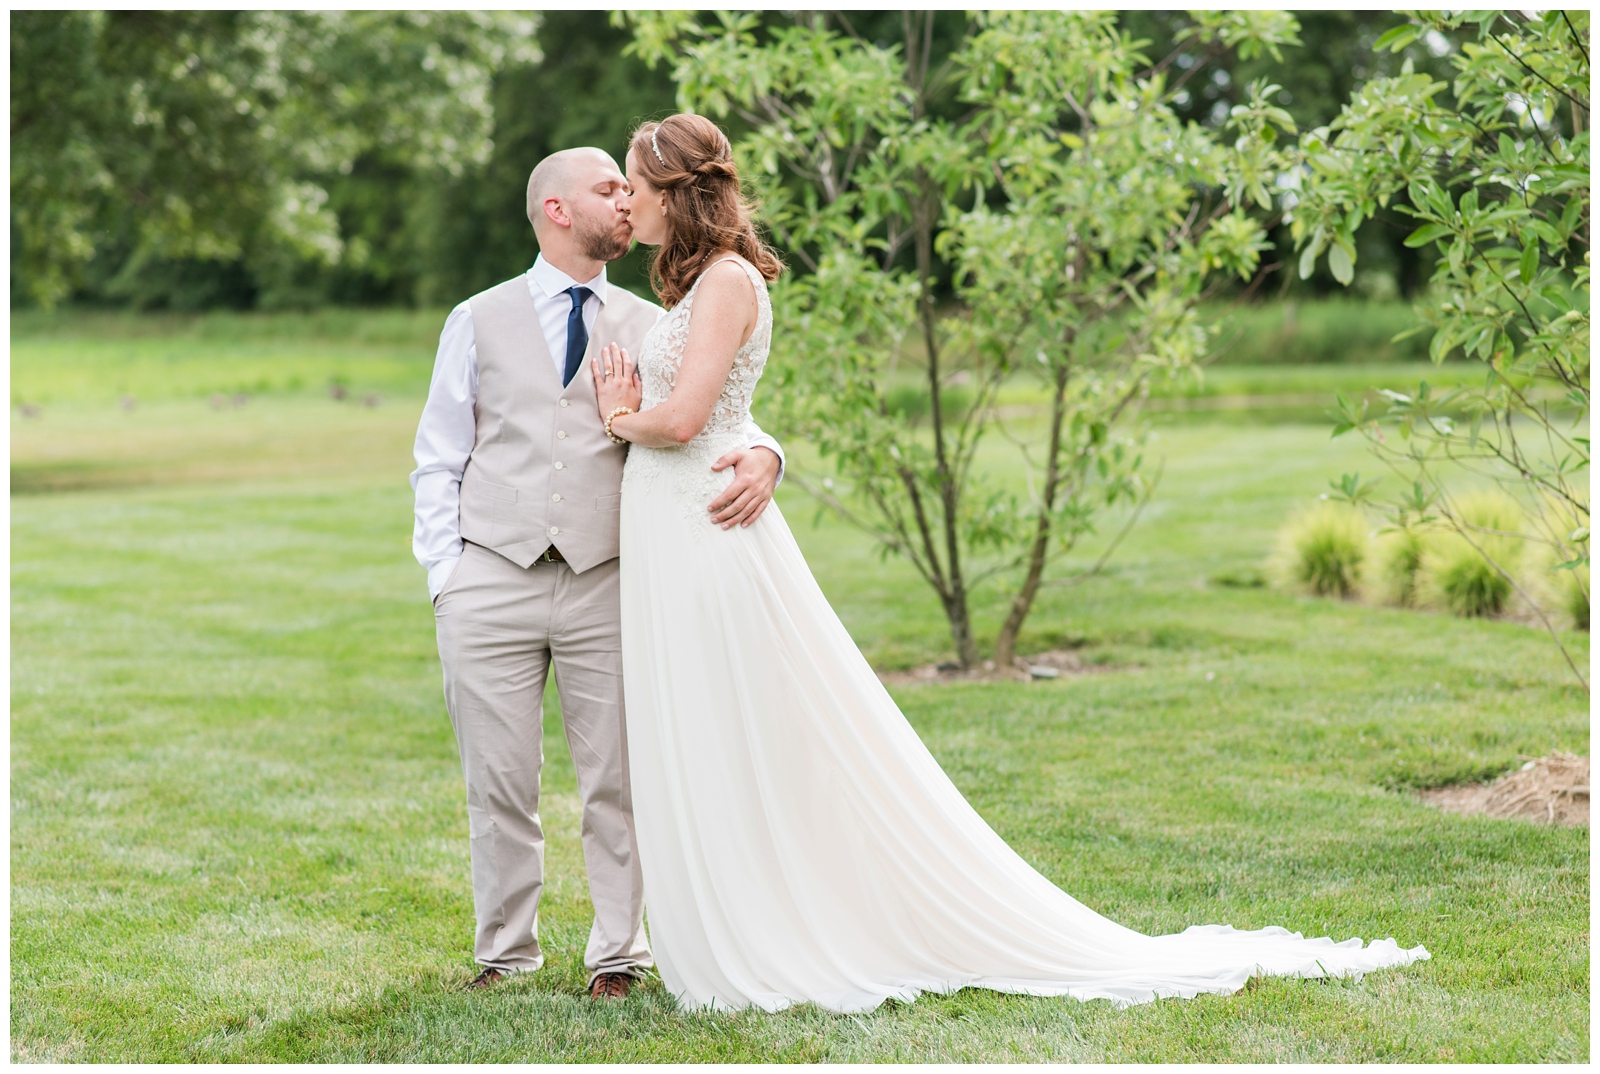 Oak Grove Jorgensen Farms wedding portrait of bride and groom kissing